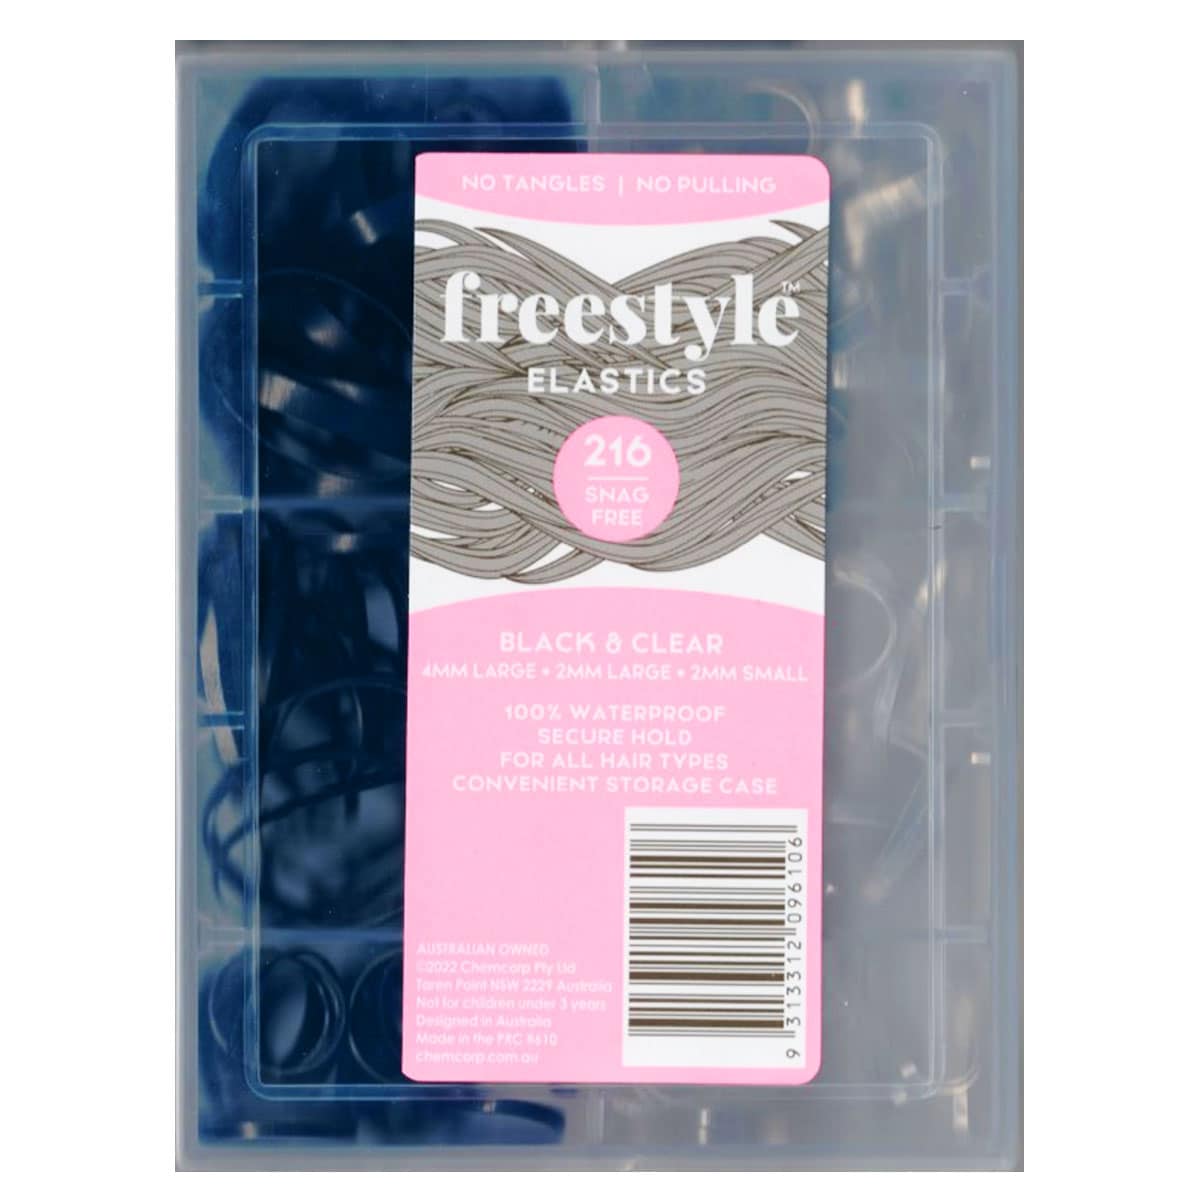 Freestyle Snag Free Hair Elastics Value Pack 216 Pieces